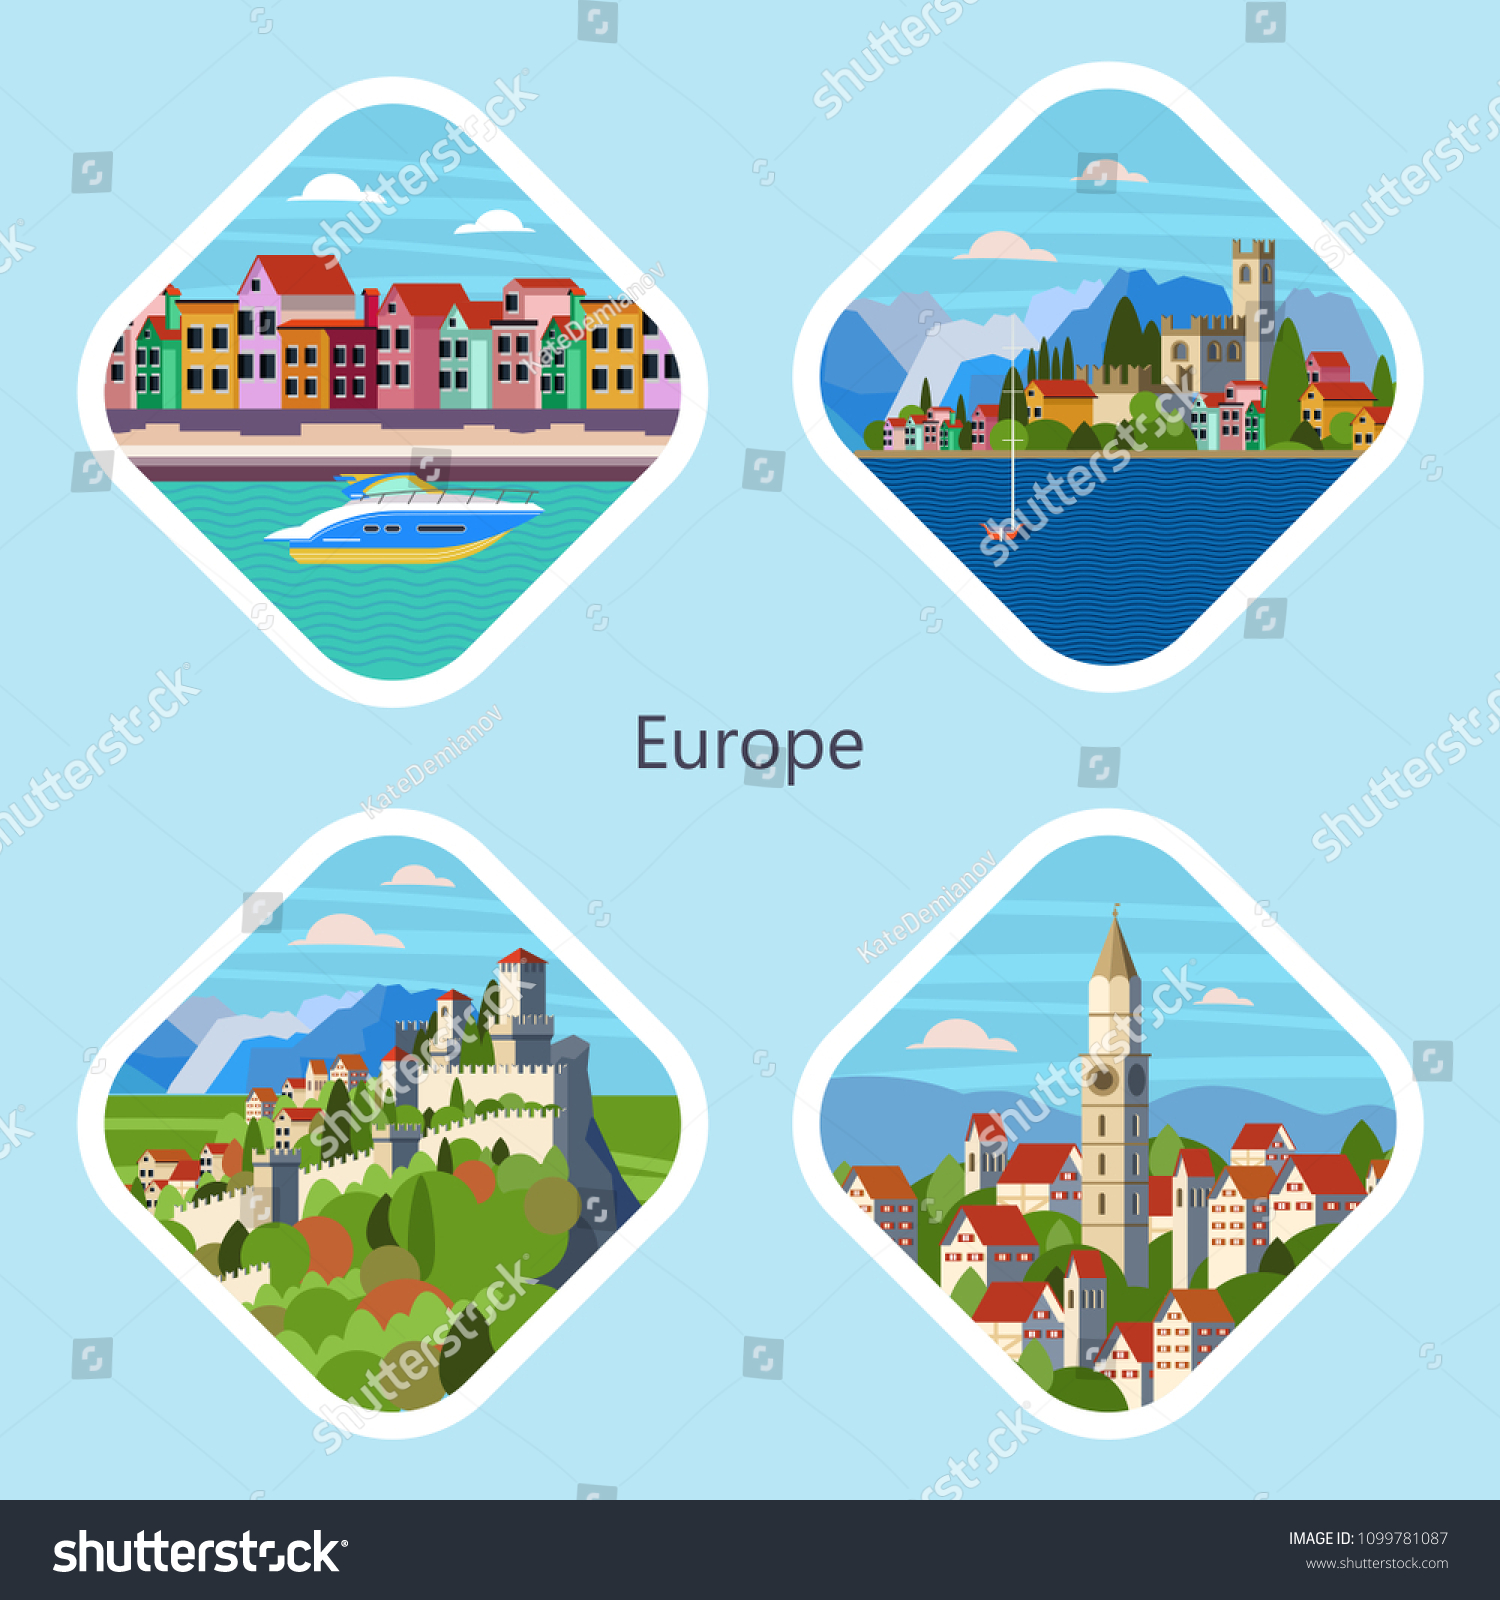 SVG of Icons views of European cities and traditional European landscapes. Vector illustration. Venice, lake Garda, Bavarian village, Republic of San Marino. svg